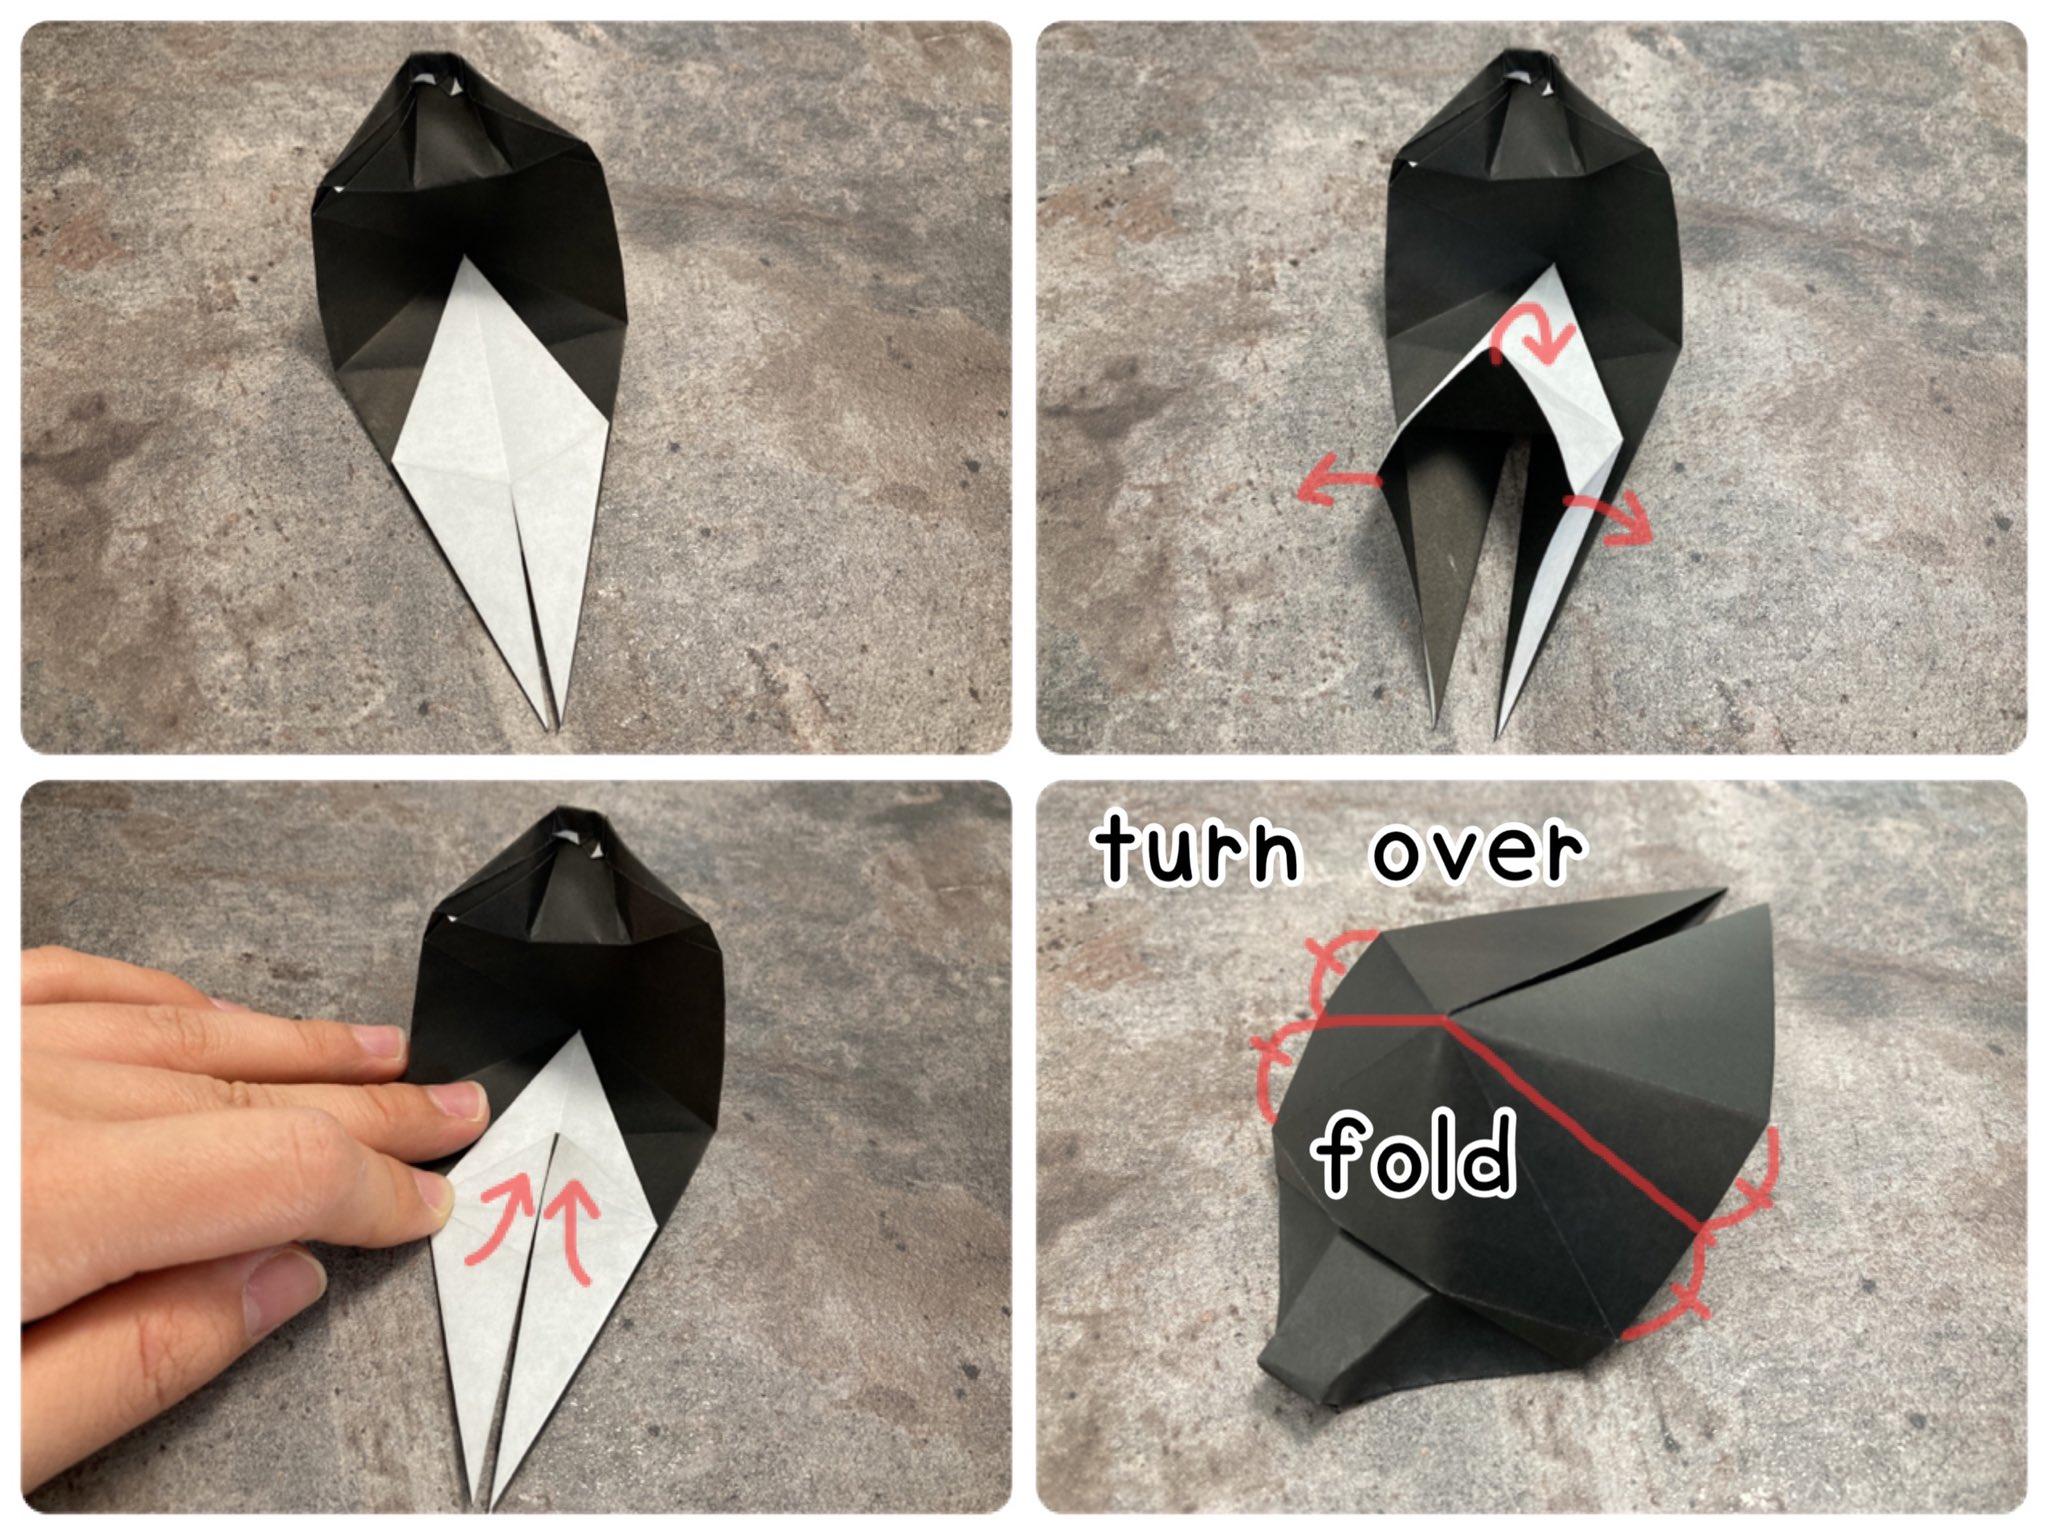 Vega 𓆩 𓆪 アヌビス面の折り方 1 3 折り紙1枚で切らずに Amp 貼らずに折れる預言の究極マスク アヌビス面の作り方です 輪っか無し How To Make Origami Anubis Mask 考案 Vega 続きはリプへ Thatskygame Sky星を紡ぐ子どもたち